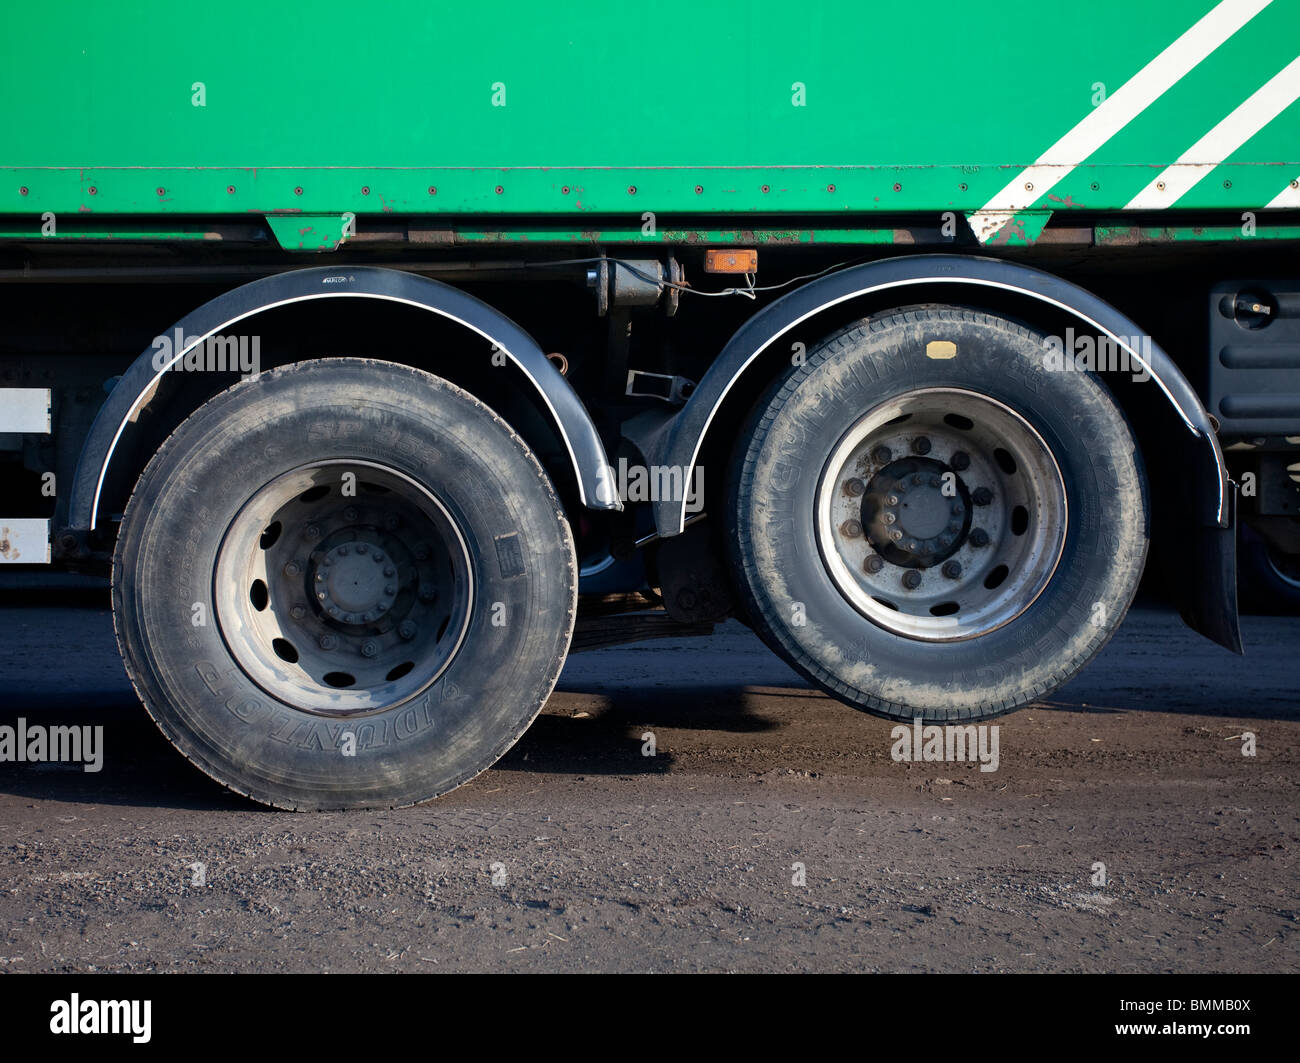 Liftable bogie at truck double rear axle Stock Photo